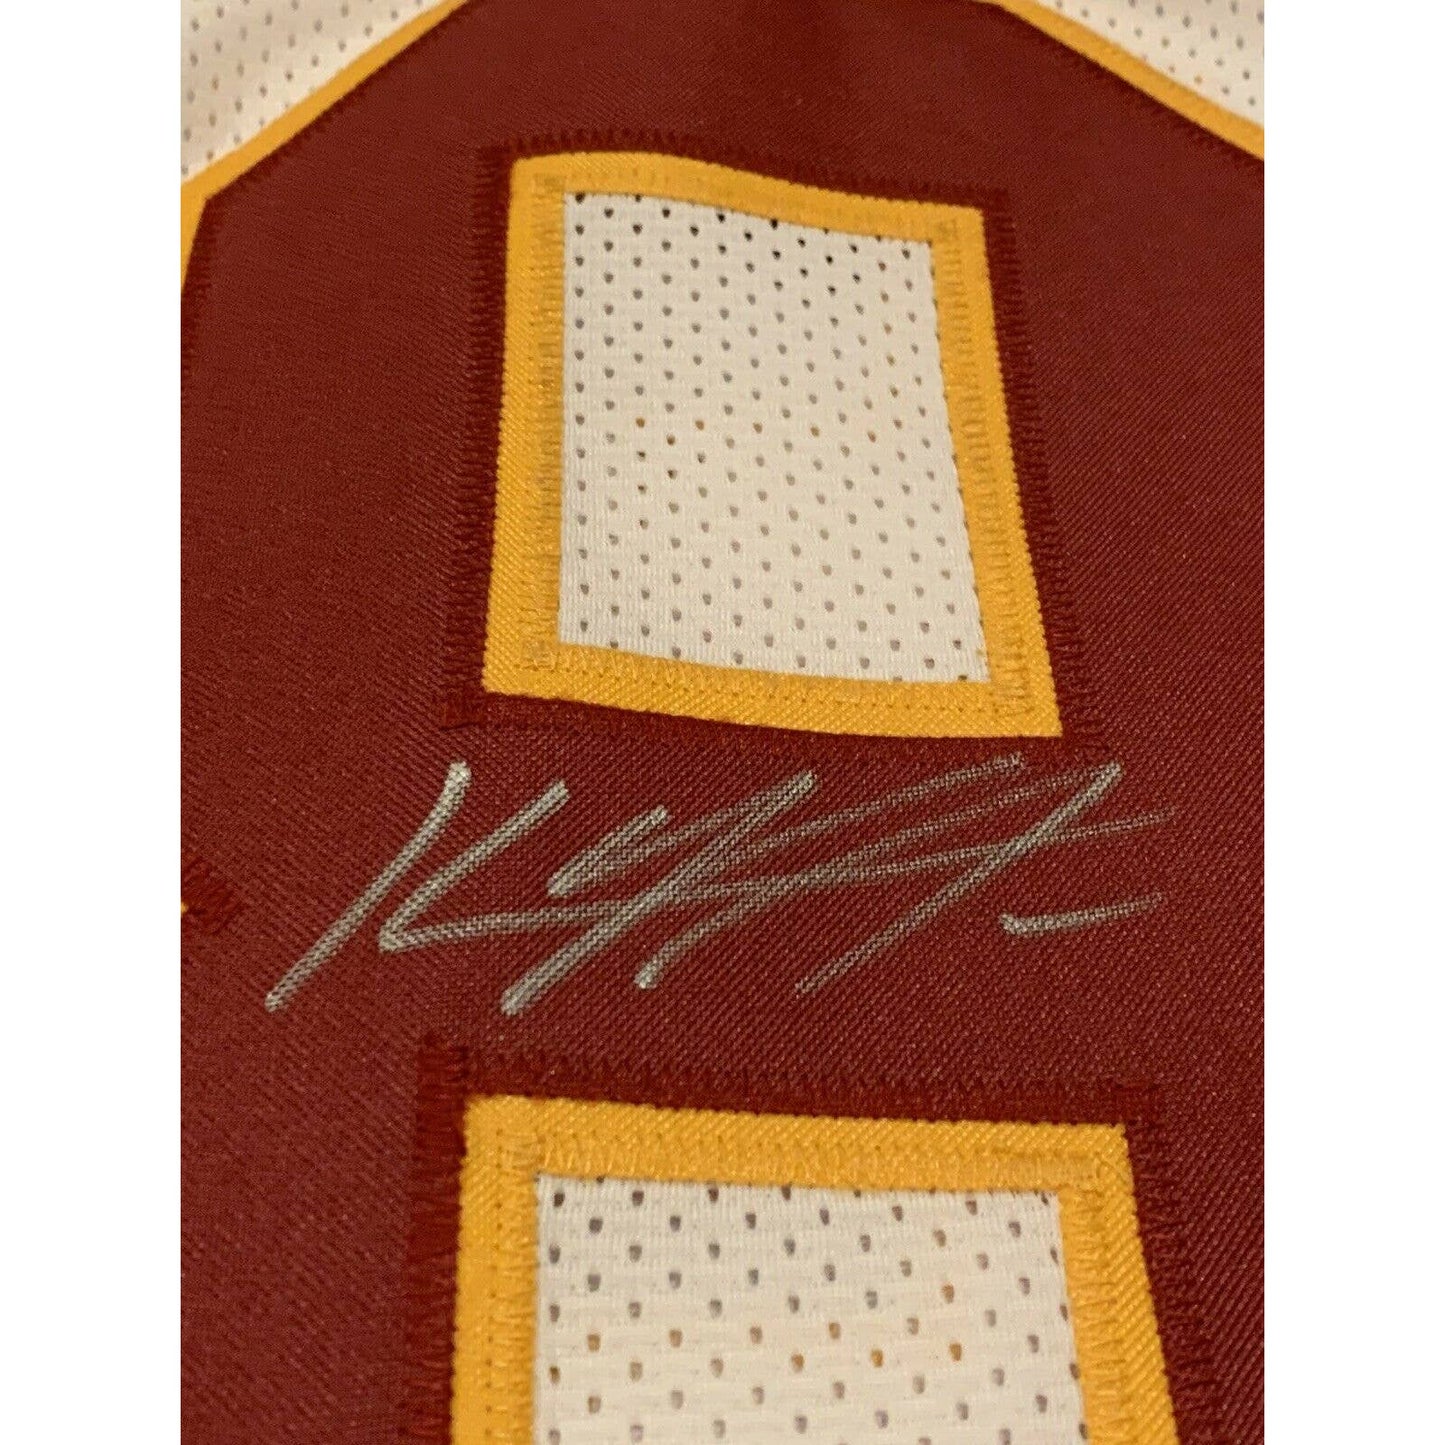 Kyle Allen Autographed/Signed Jersey Beckett COA Washington Football Team - TreasuresEvolved